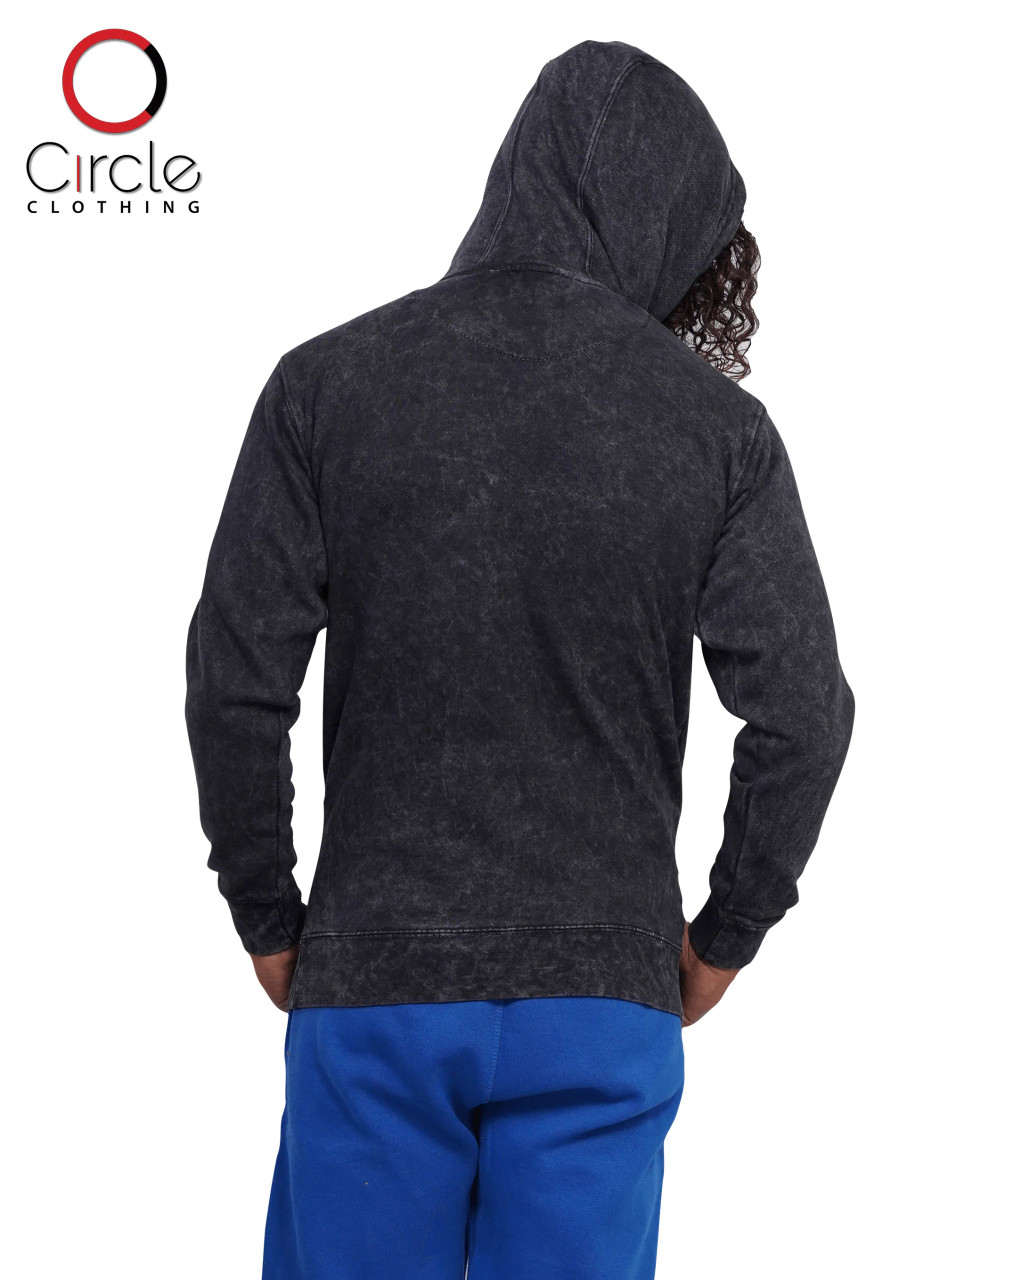 Unisex Active Fleece Jogger Pants 8.25 Oz by Circle Clothing - 2600